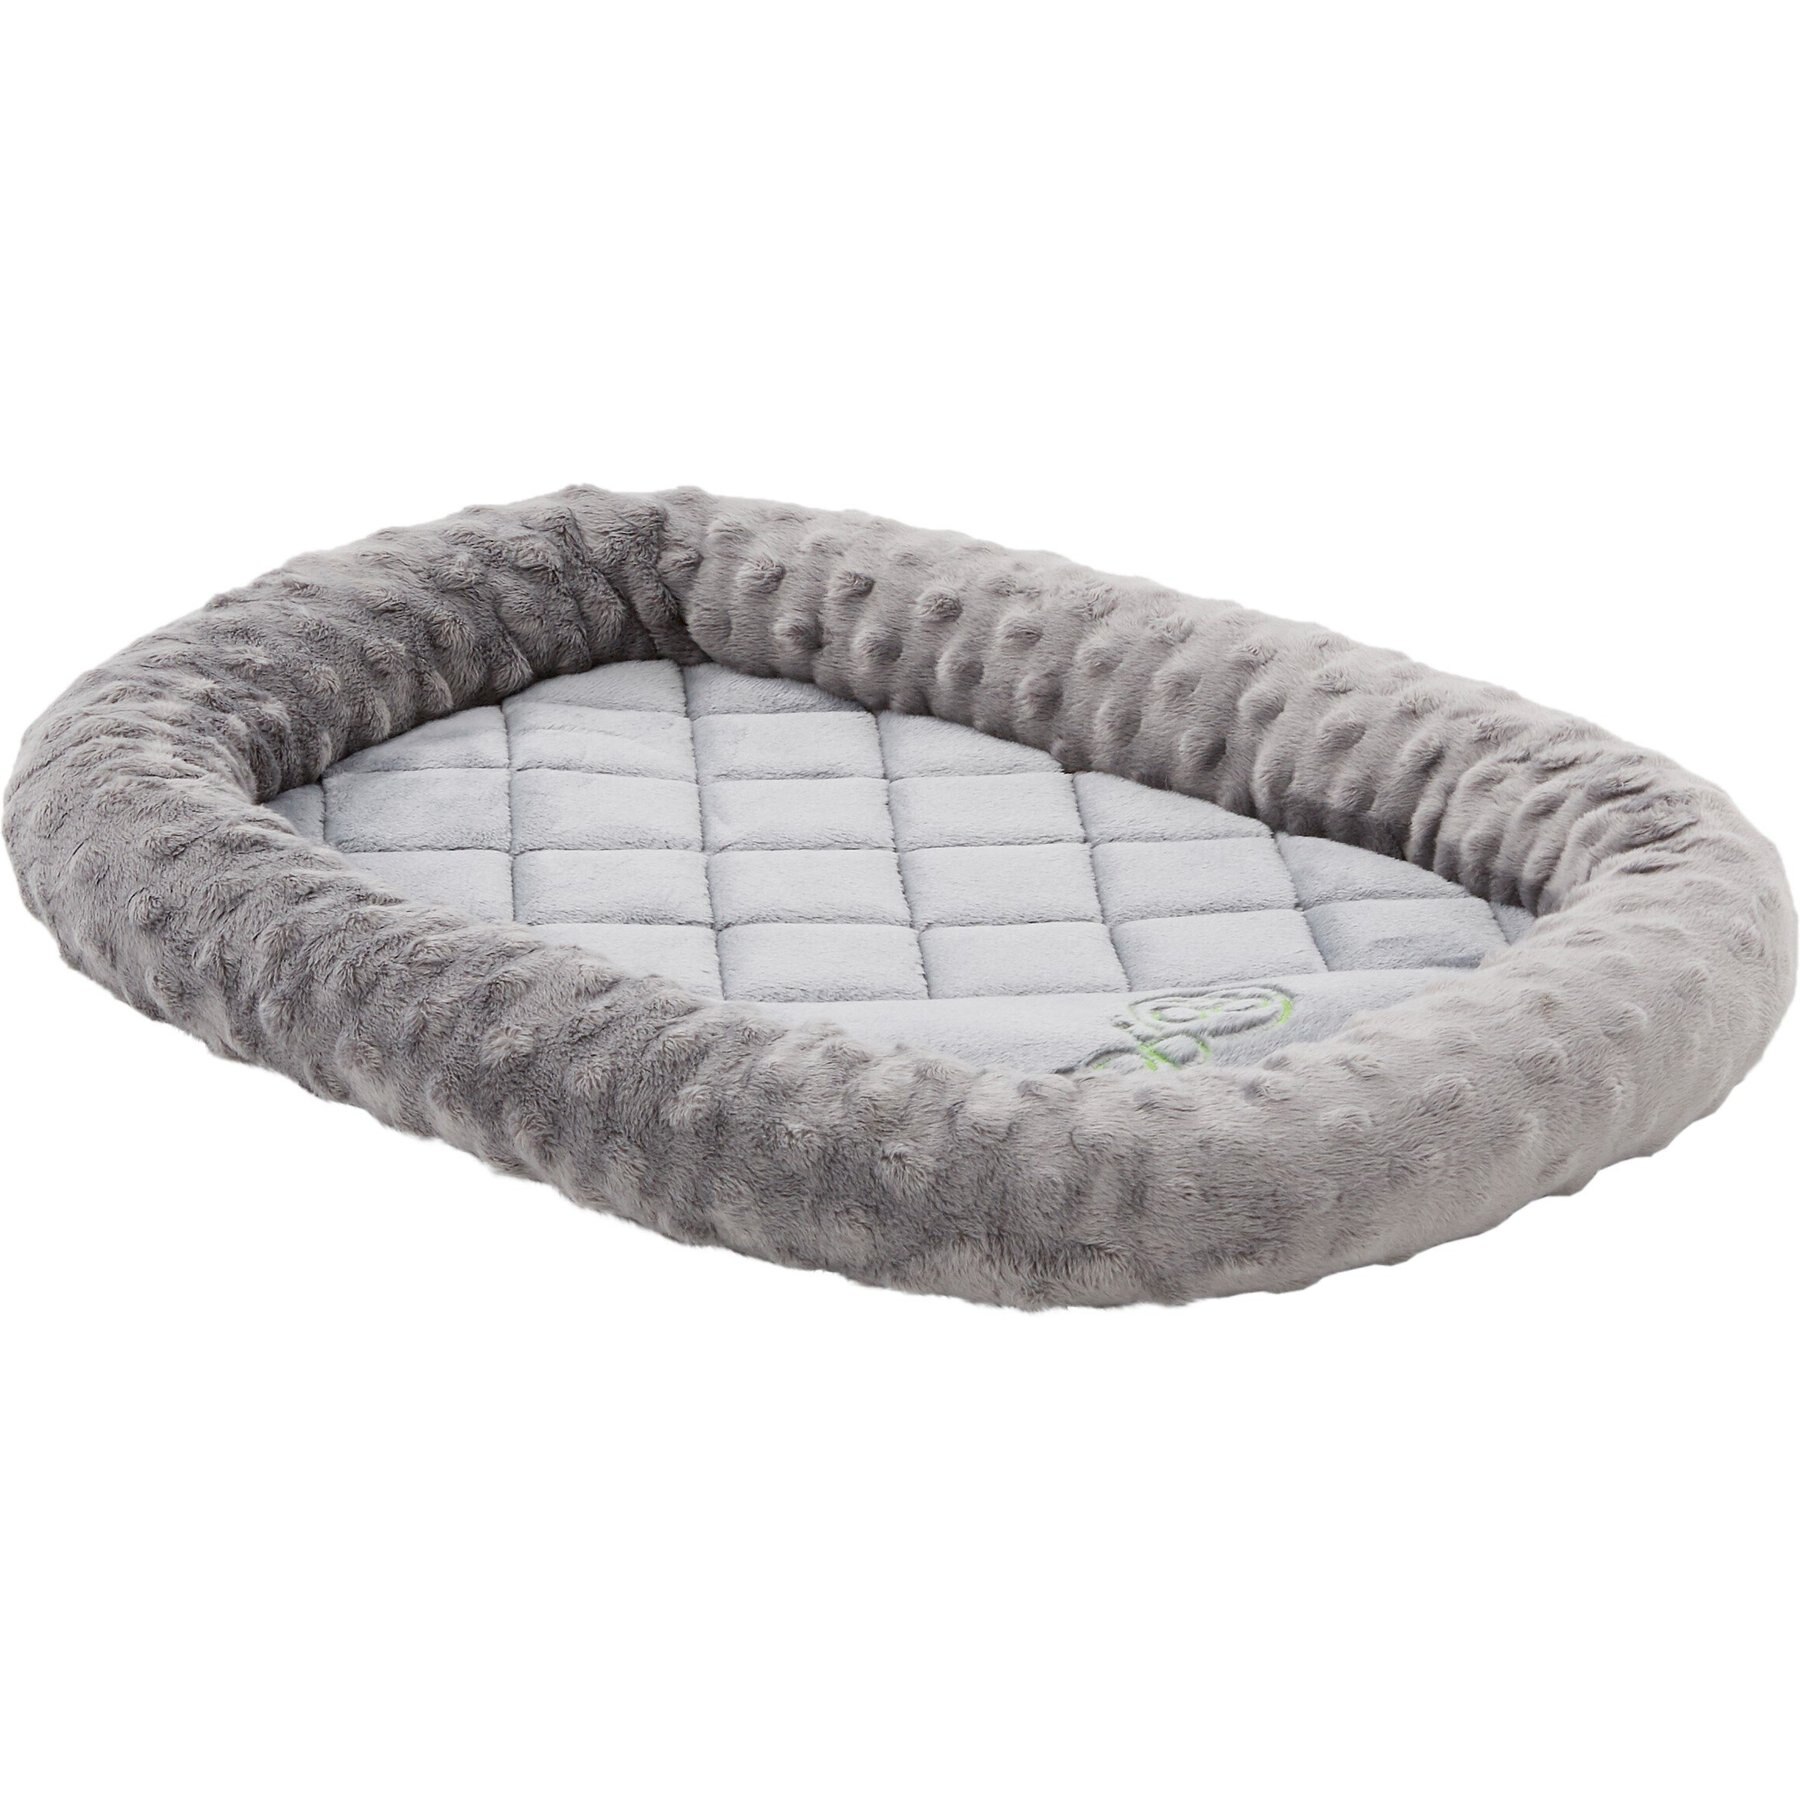 Allisandro Anti-Slip Kennel Pads Waterproof Dog Bed, Grey, Large